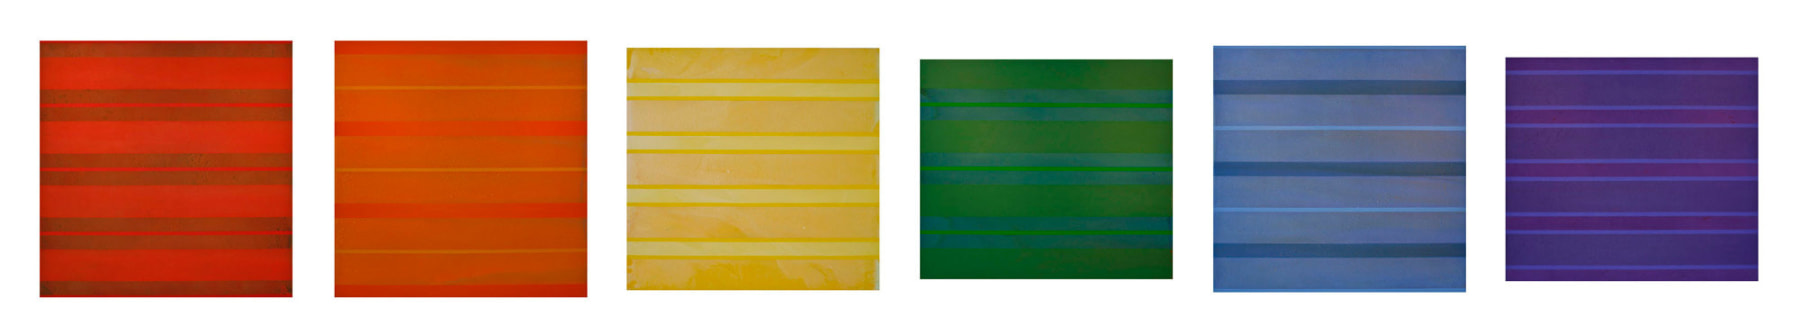 ROYGBP SET 2009
Six canvases, 55.5 x 311&amp;quot;

&amp;nbsp;